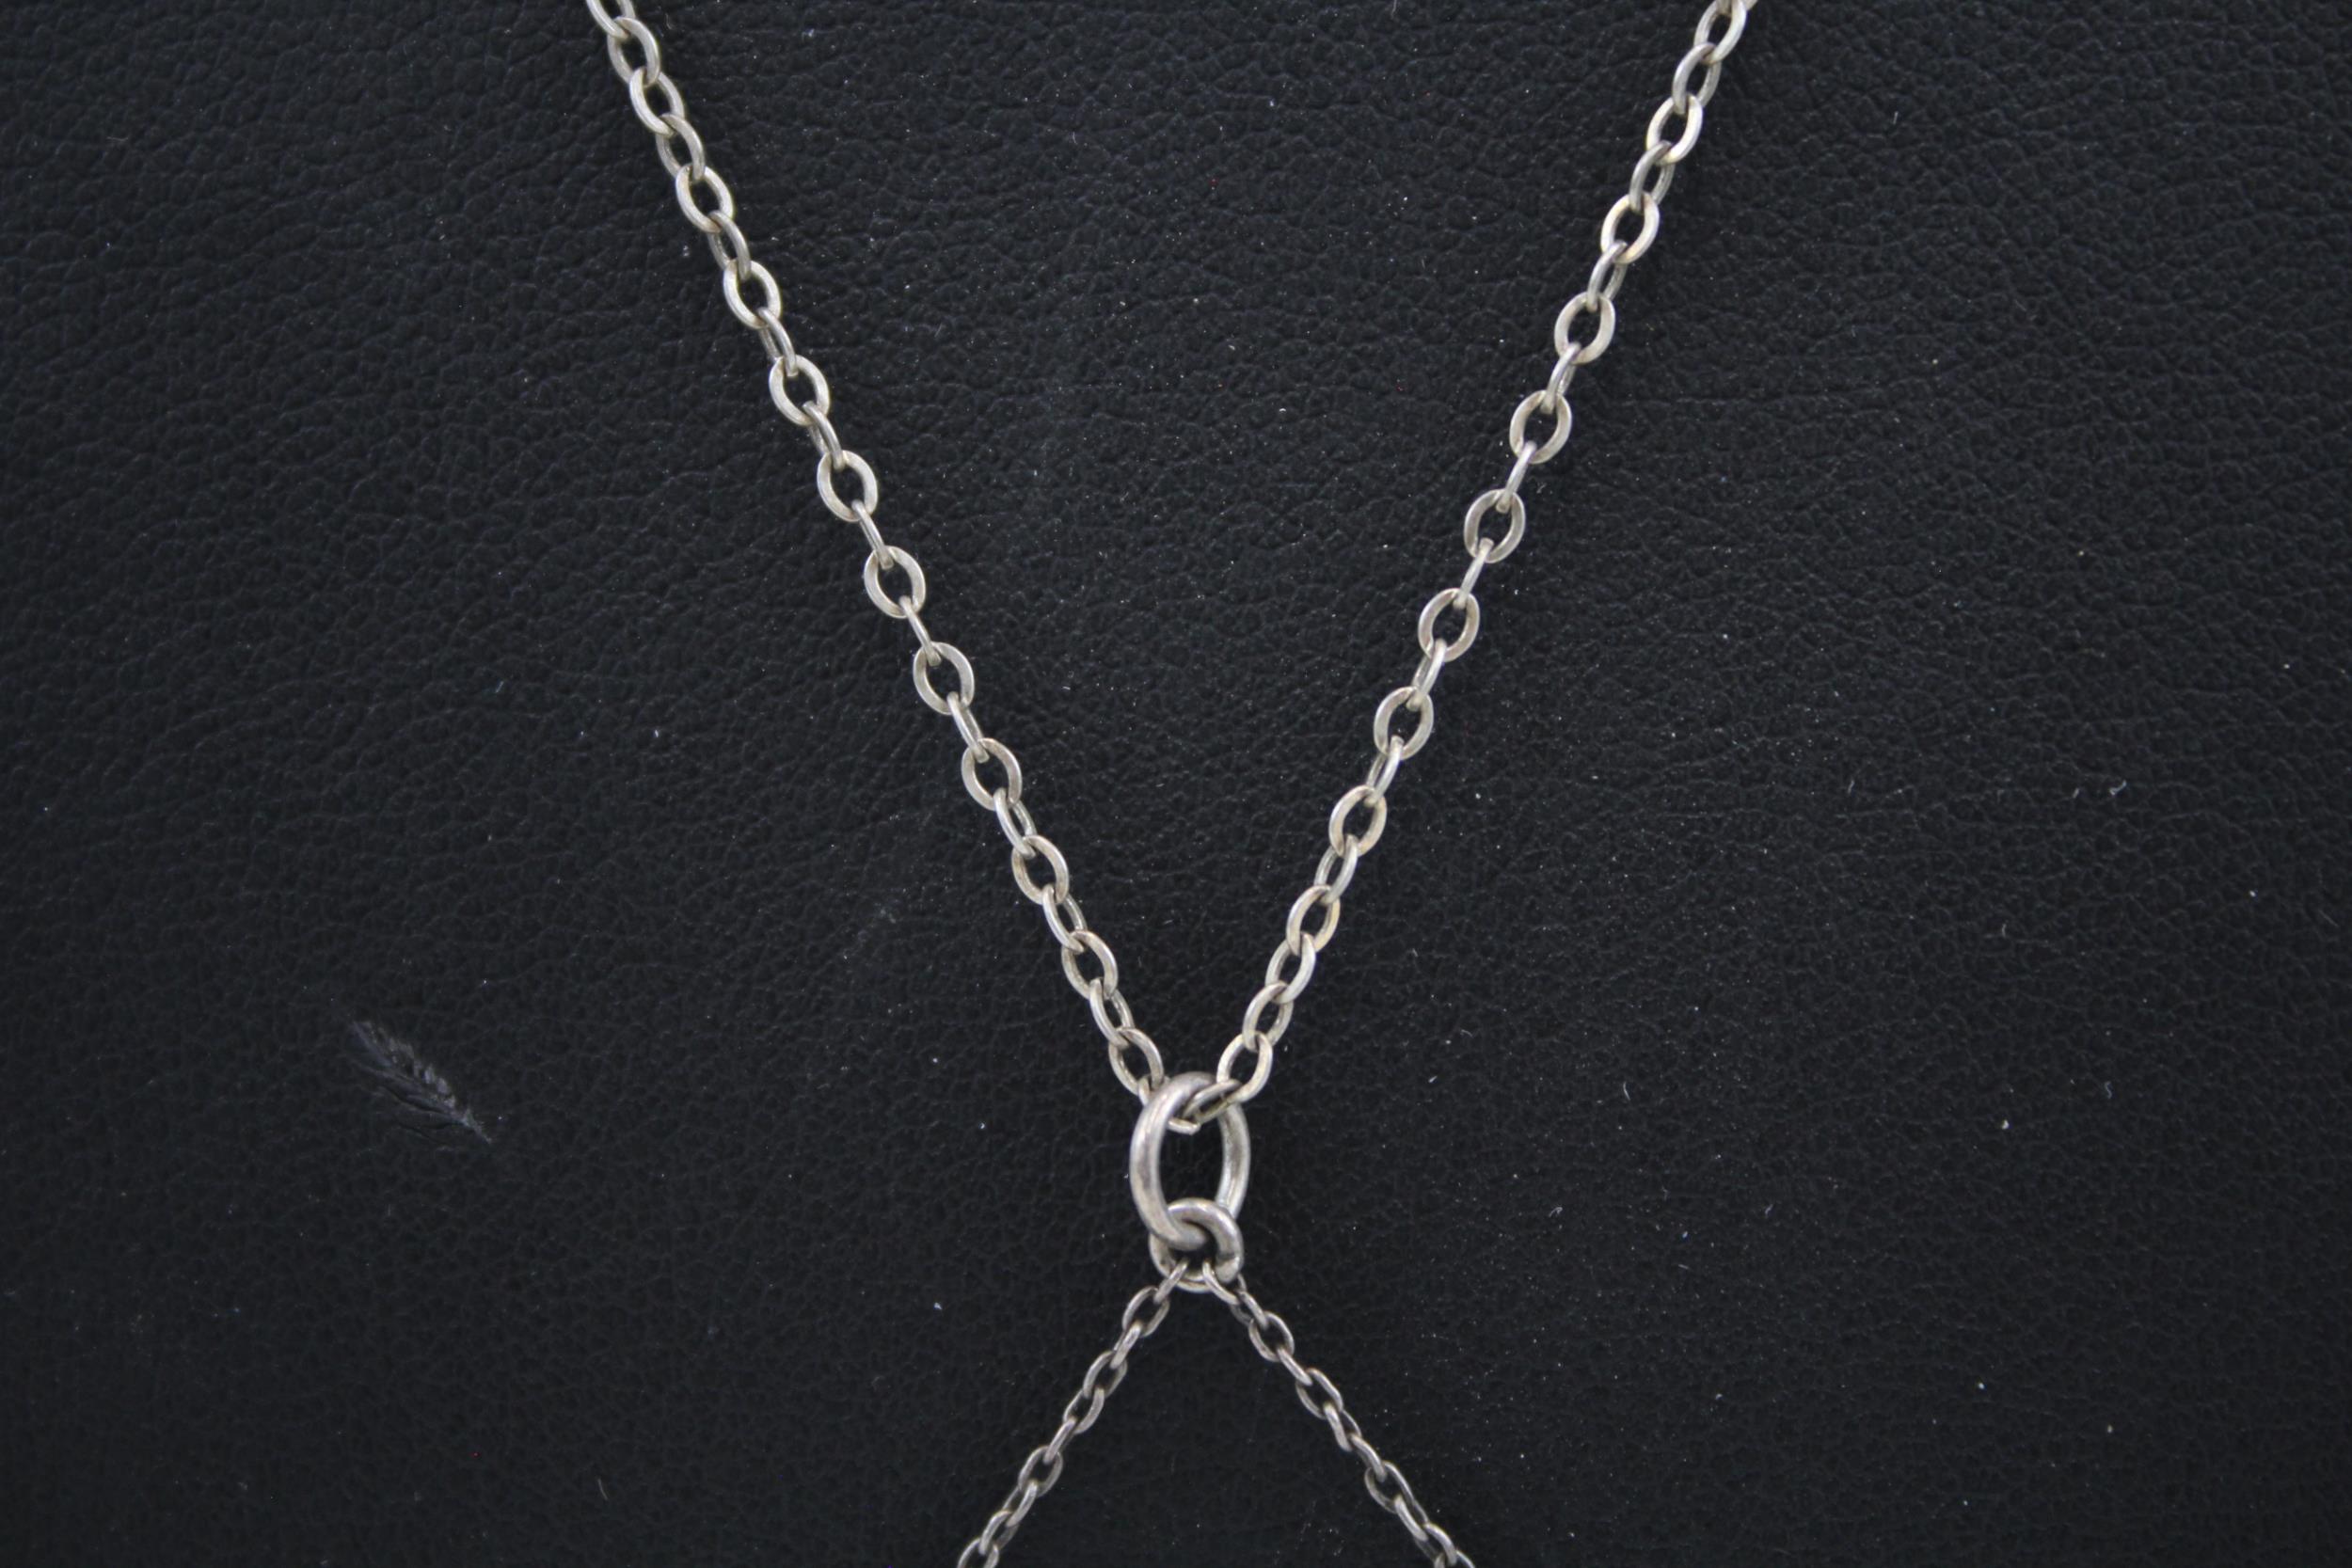 Silver Arts & Crafts enamel necklace (7g) - Image 3 of 7